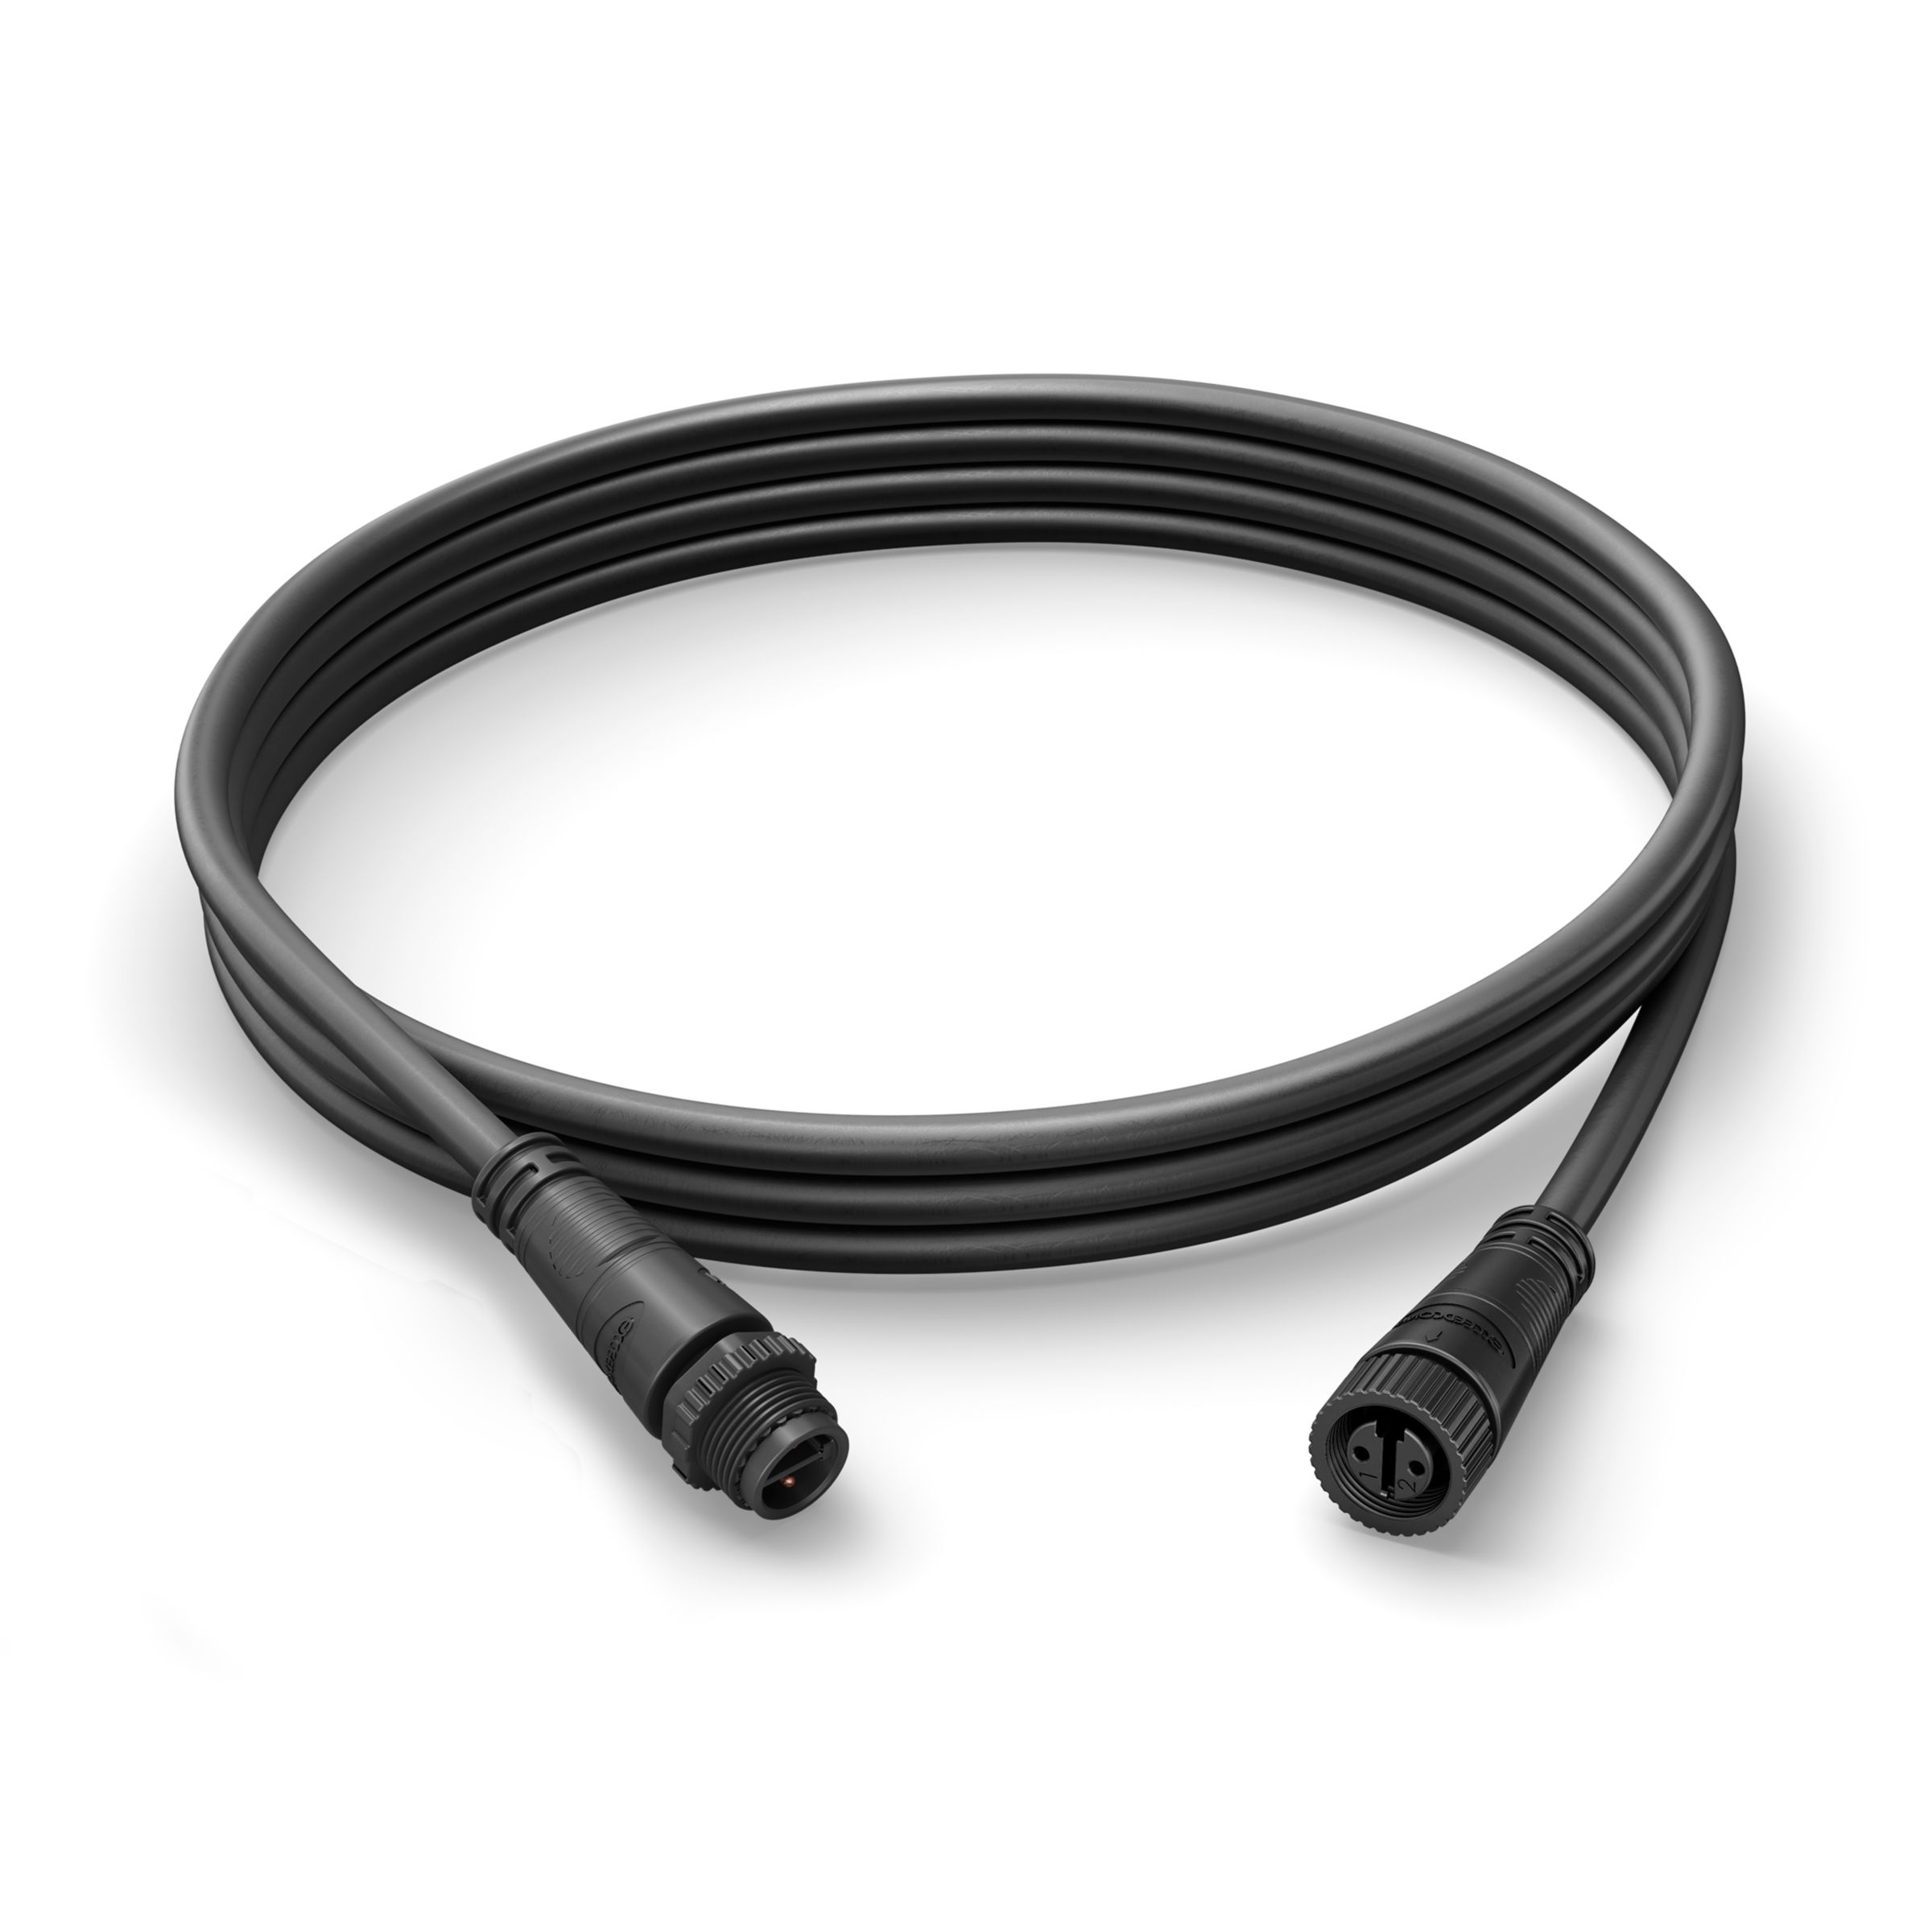 Konnect Sync- 5m Cord Length